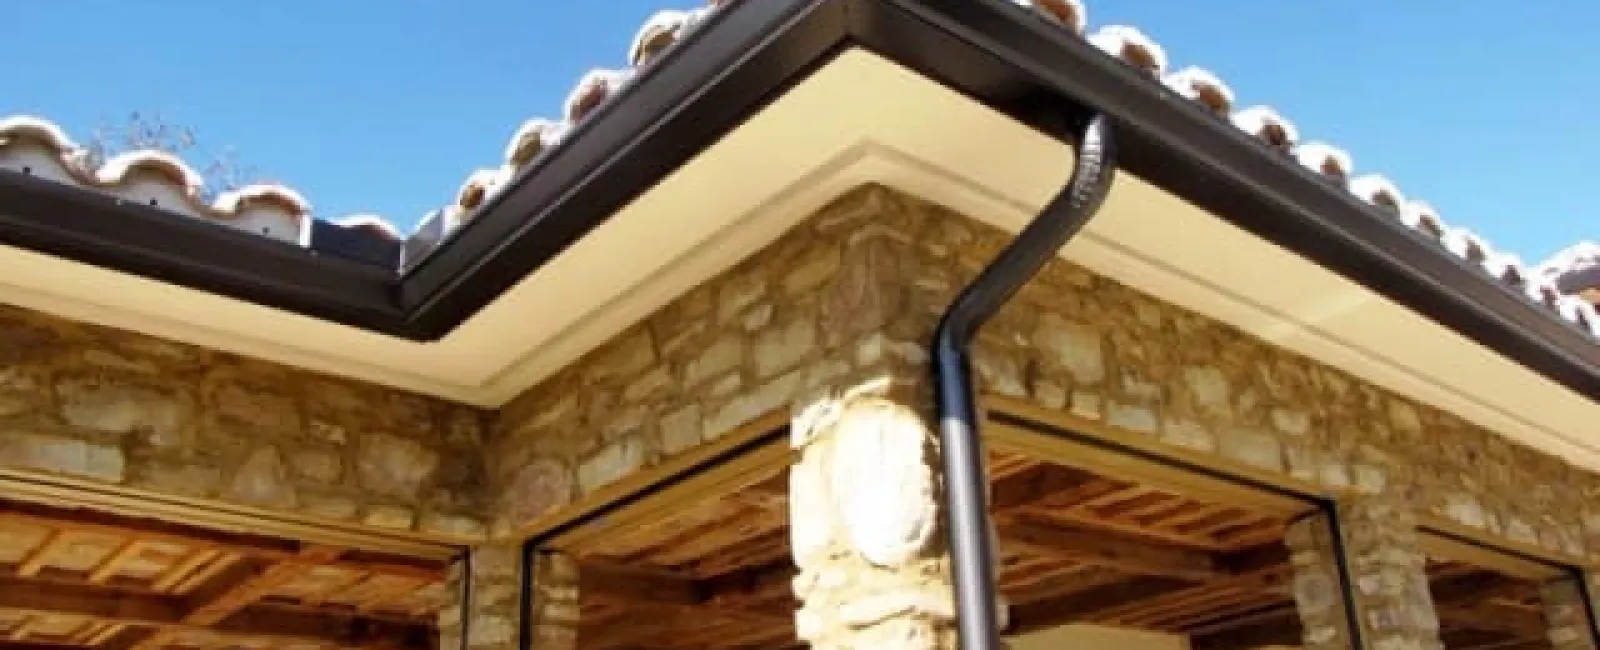 Gutter Maintenance and Roof Fascia Repair Checklist